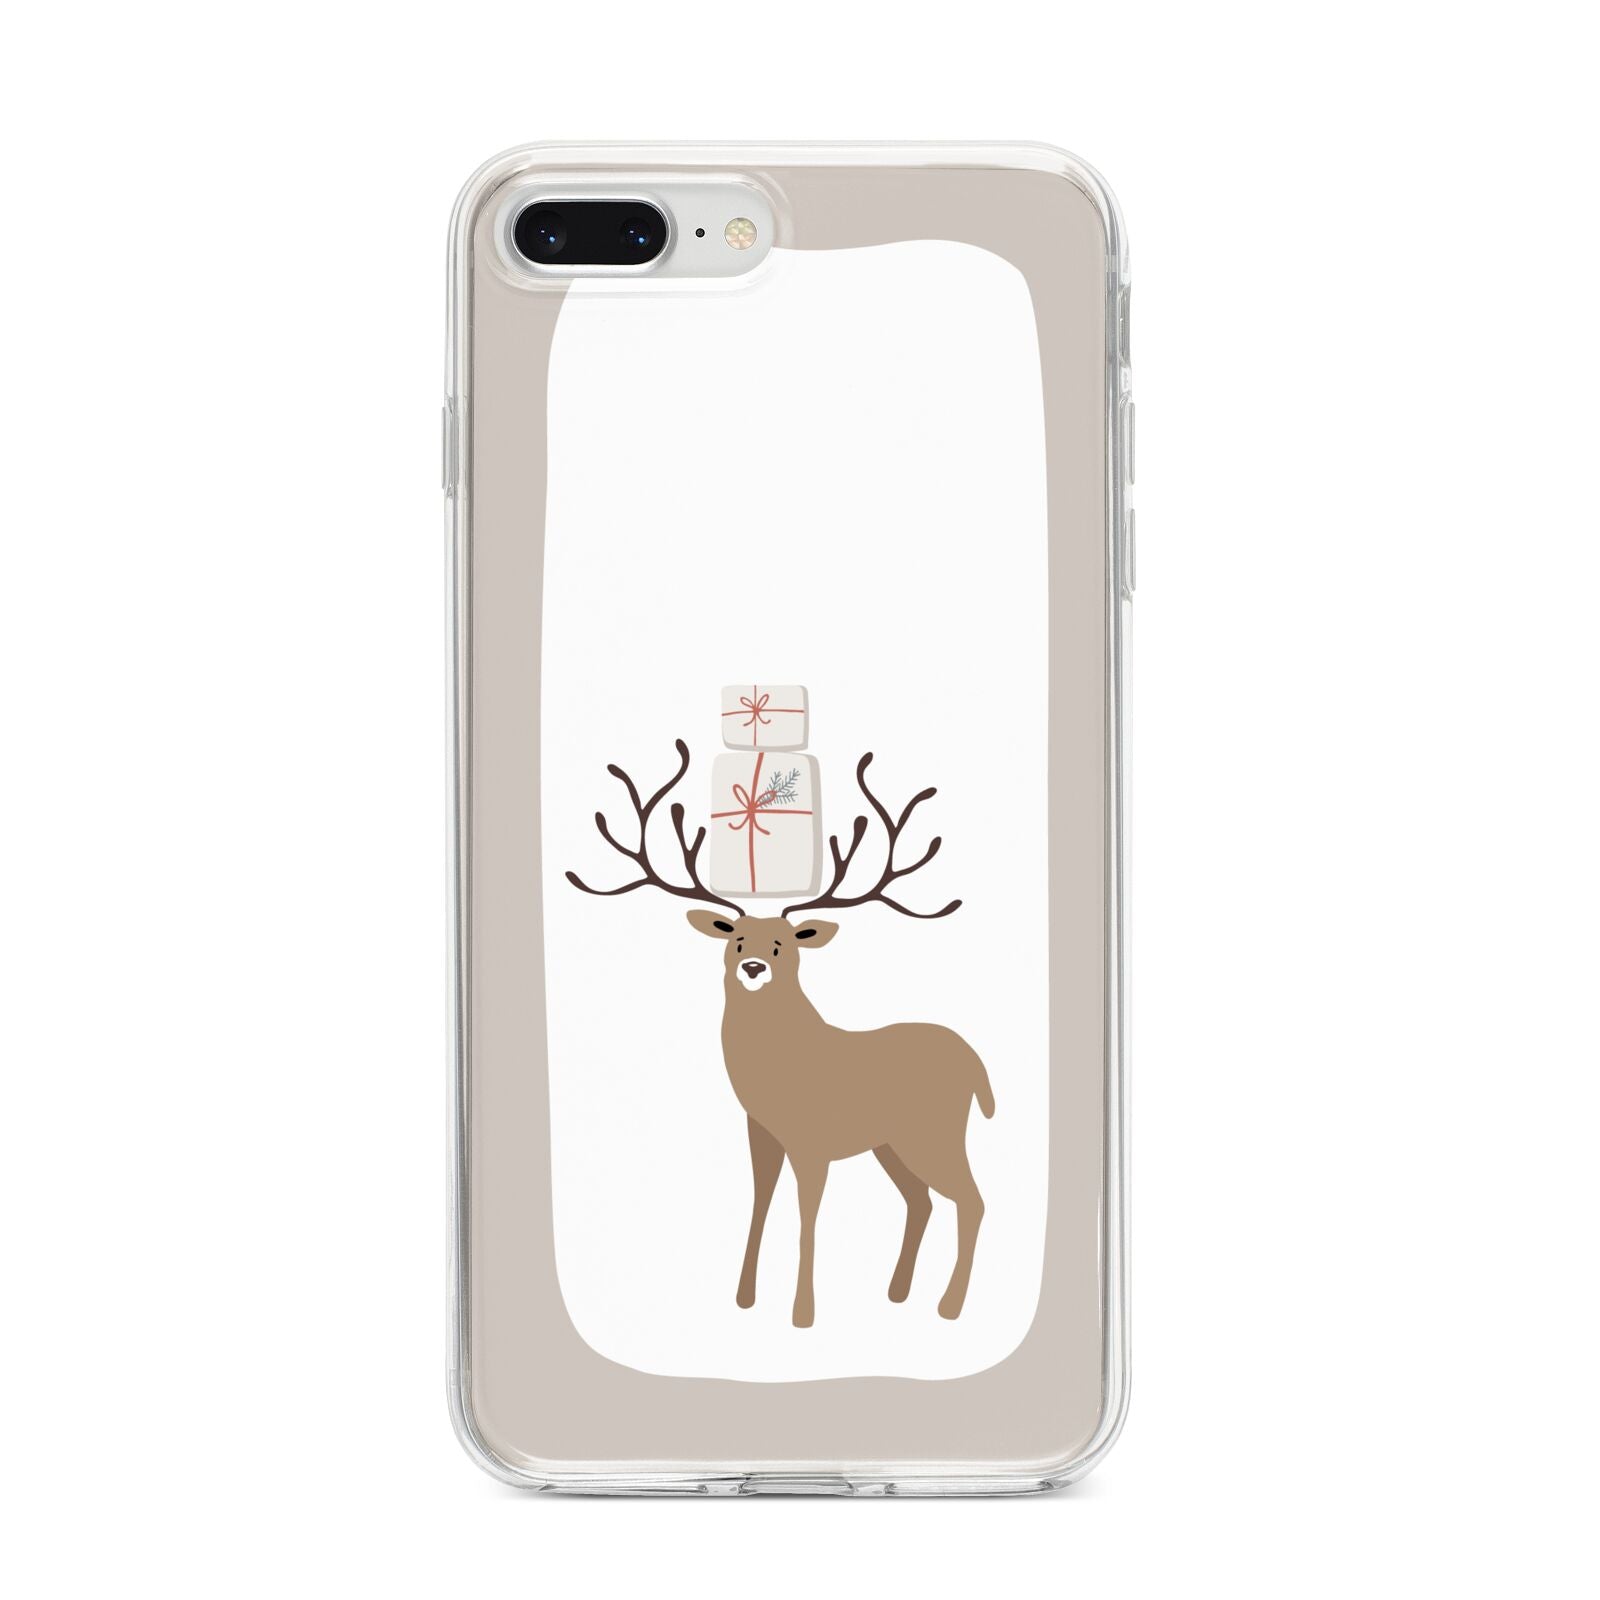 Reindeer Presents iPhone 8 Plus Bumper Case on Silver iPhone